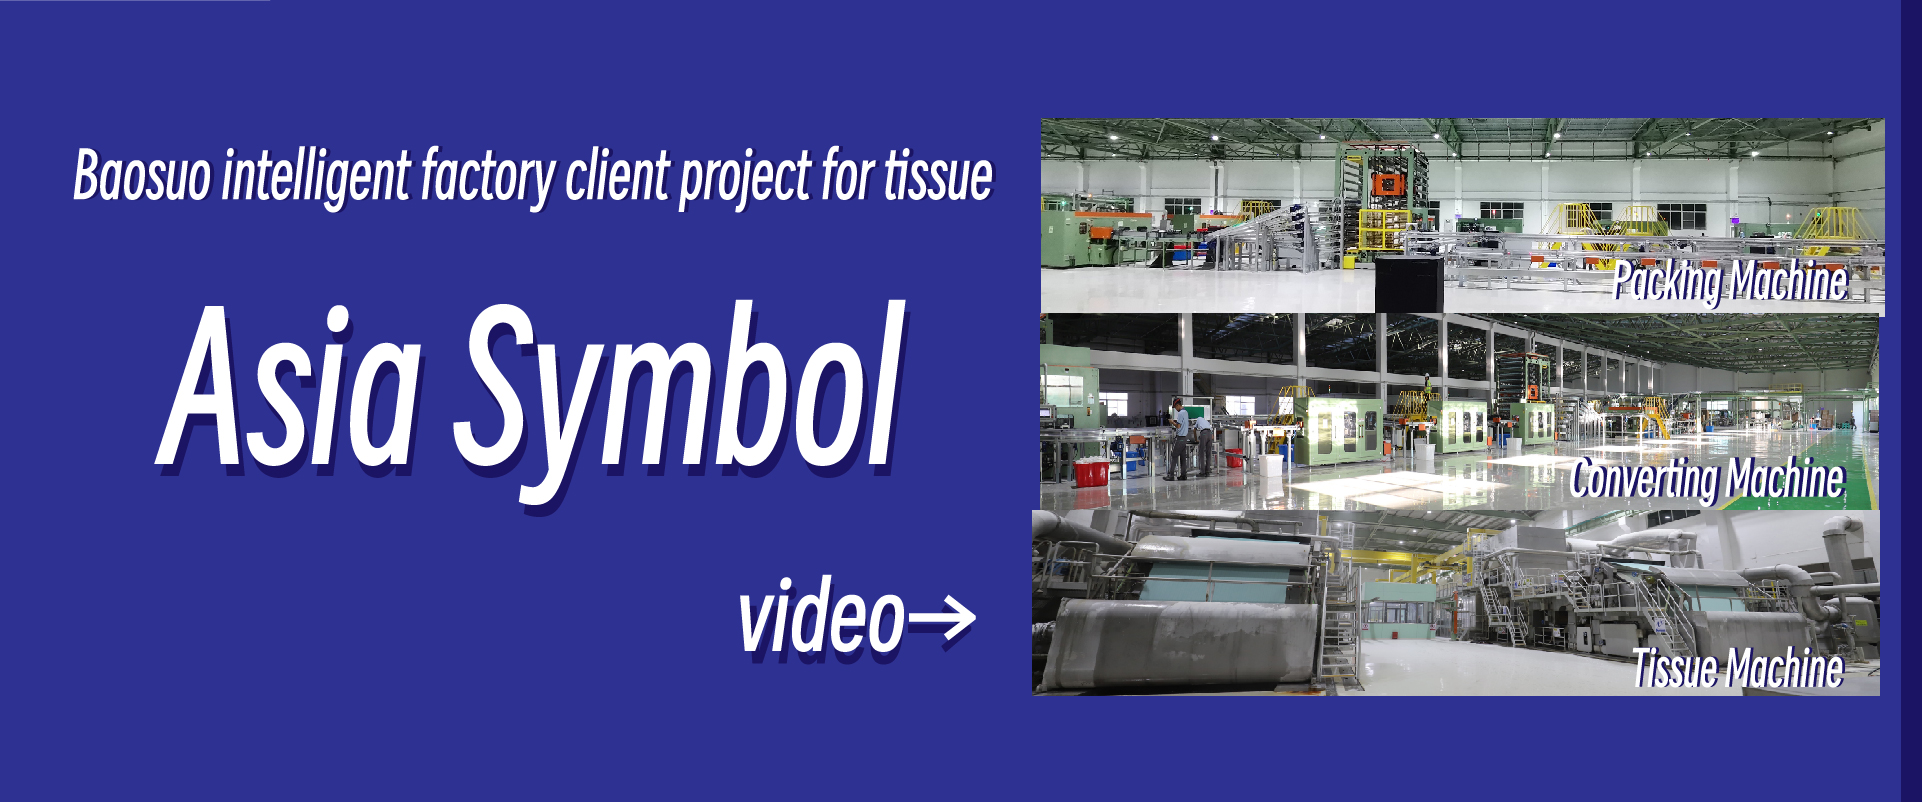 Projeto de cliente de fábrica inteligente Baosuo para tecido——Símbolo da Ásia